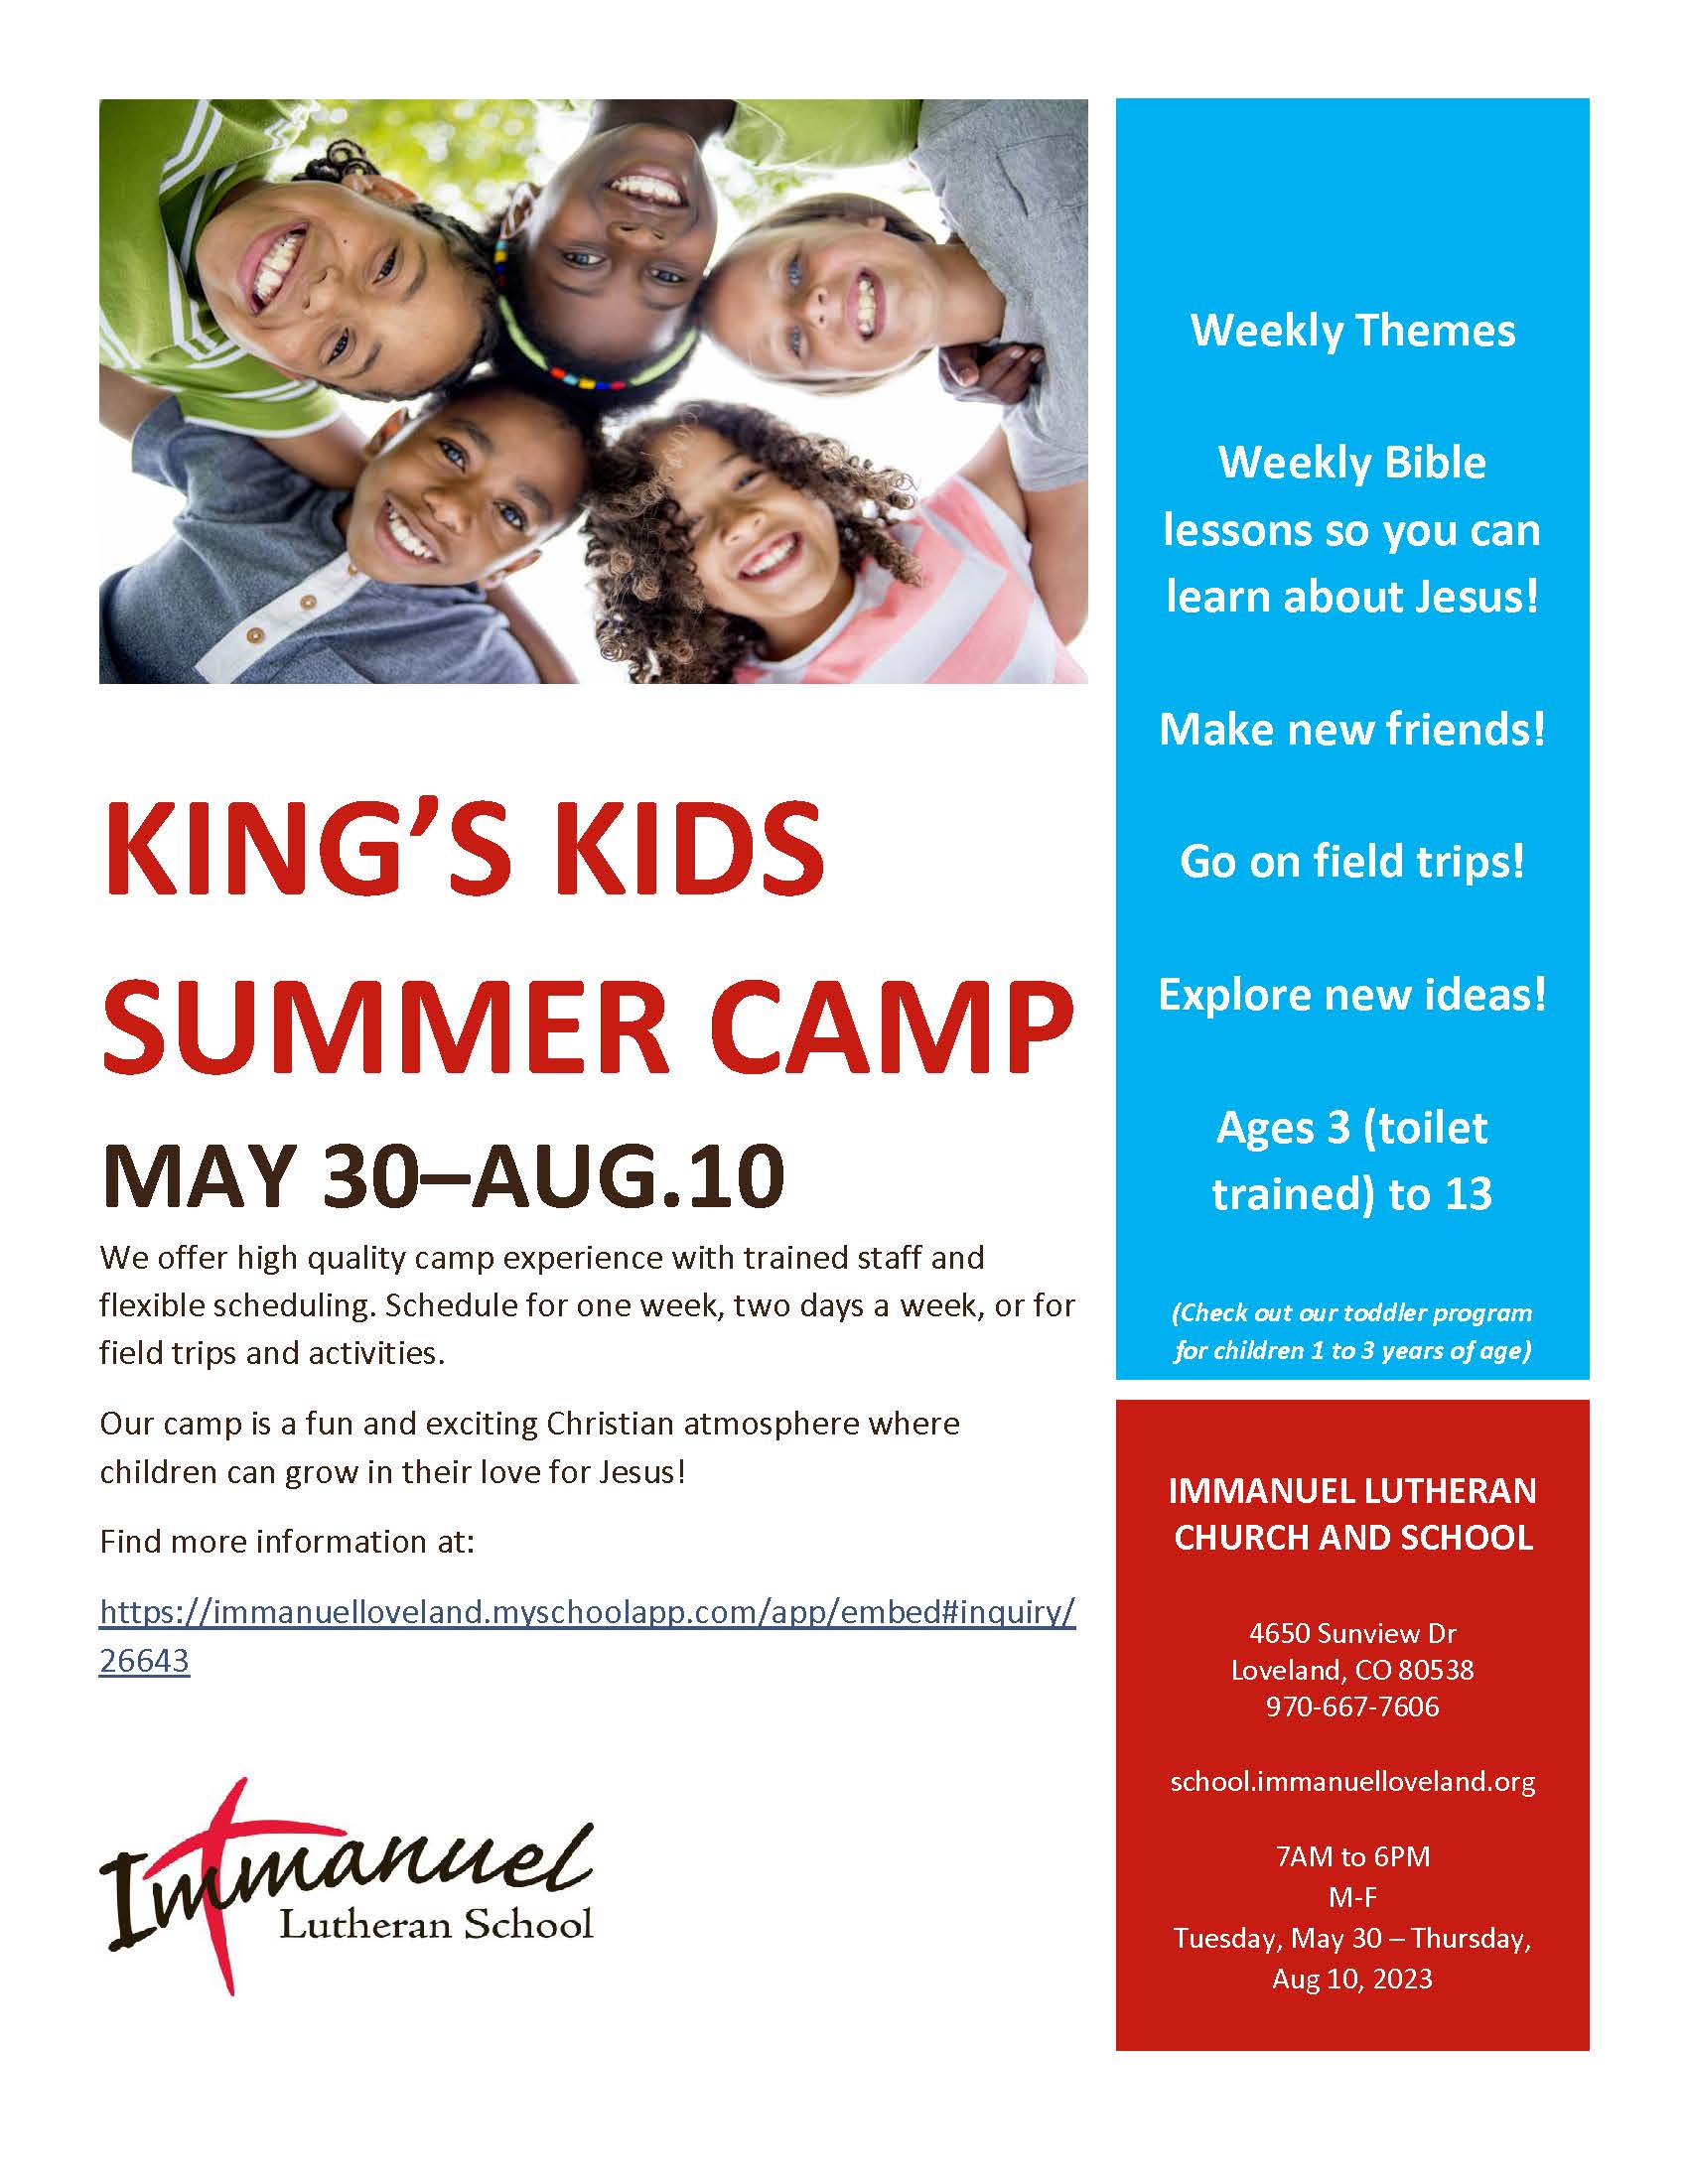 King's Kids Summer Camp